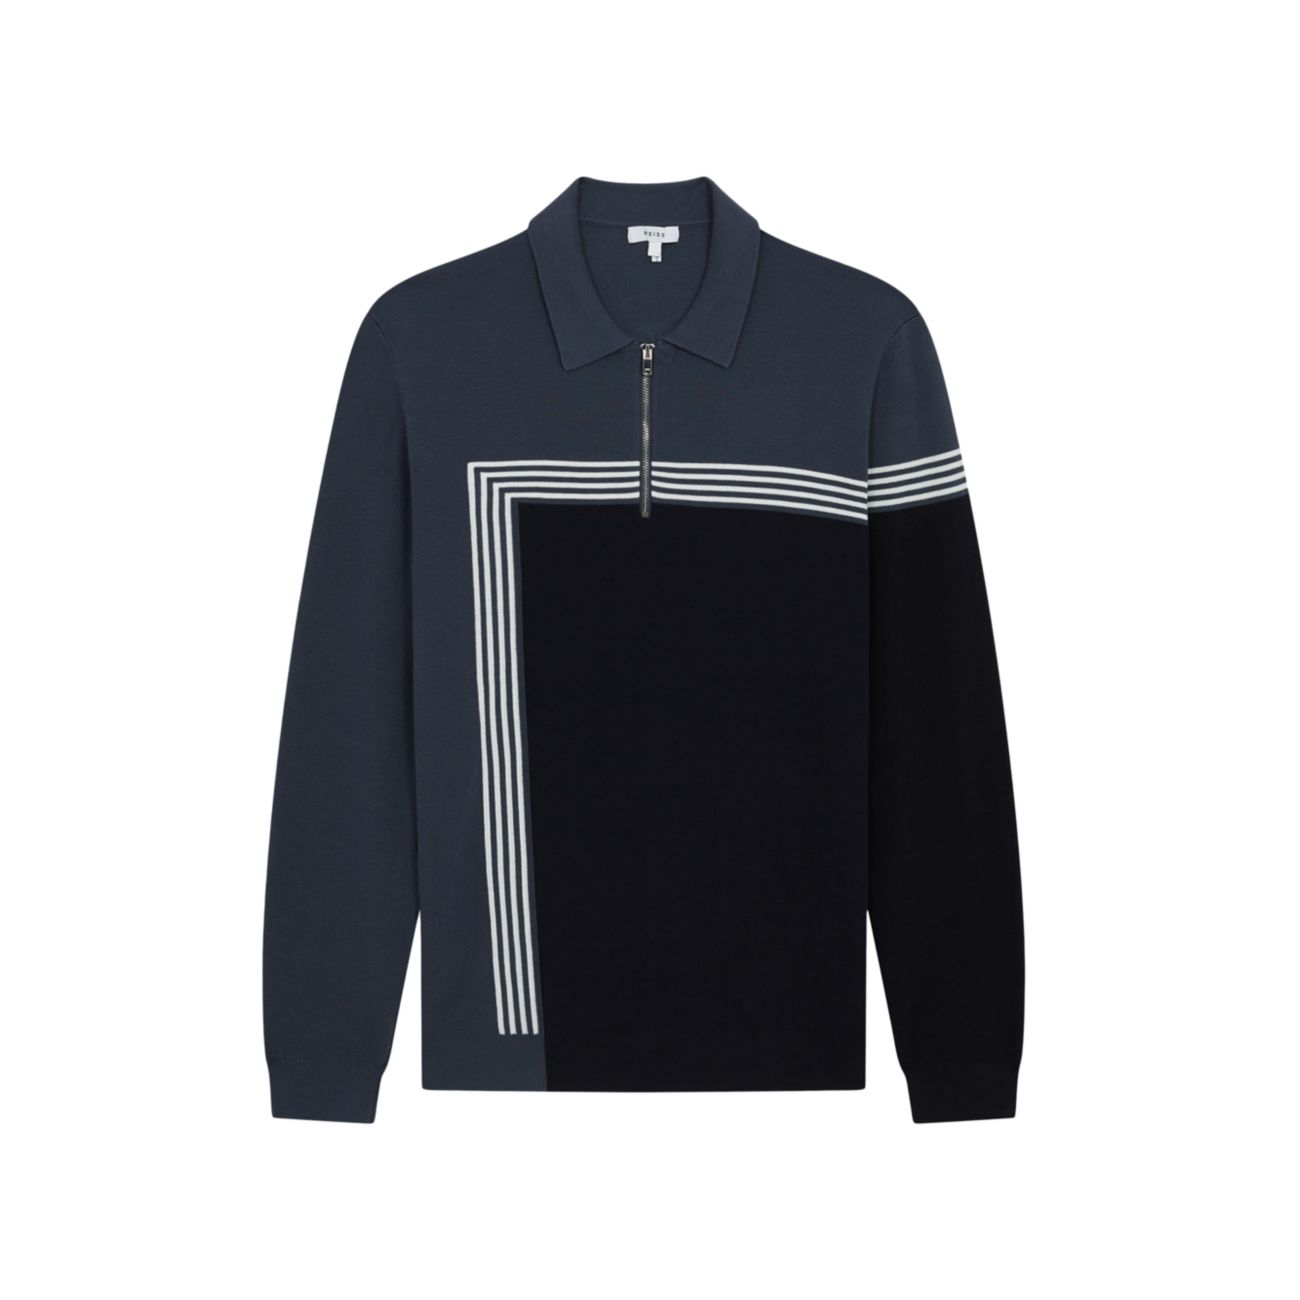 Charles Colorblocked Quarter-Zip Sweater REISS